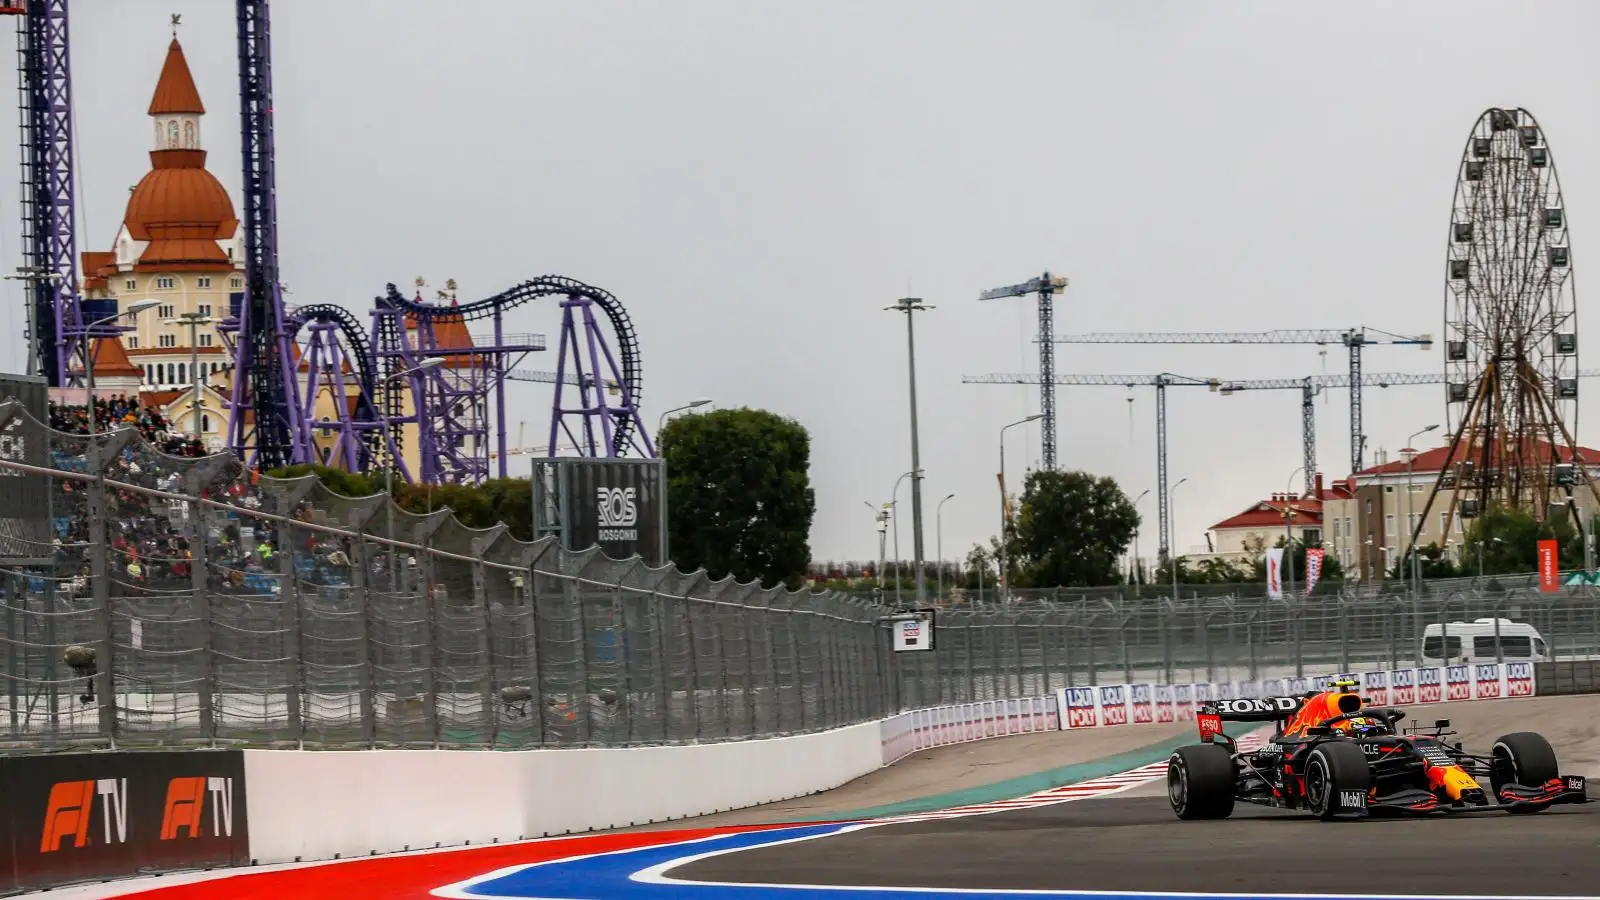 The Red Bull car at the Russian Grand Prix. Russian GP Sochi, September 2021.